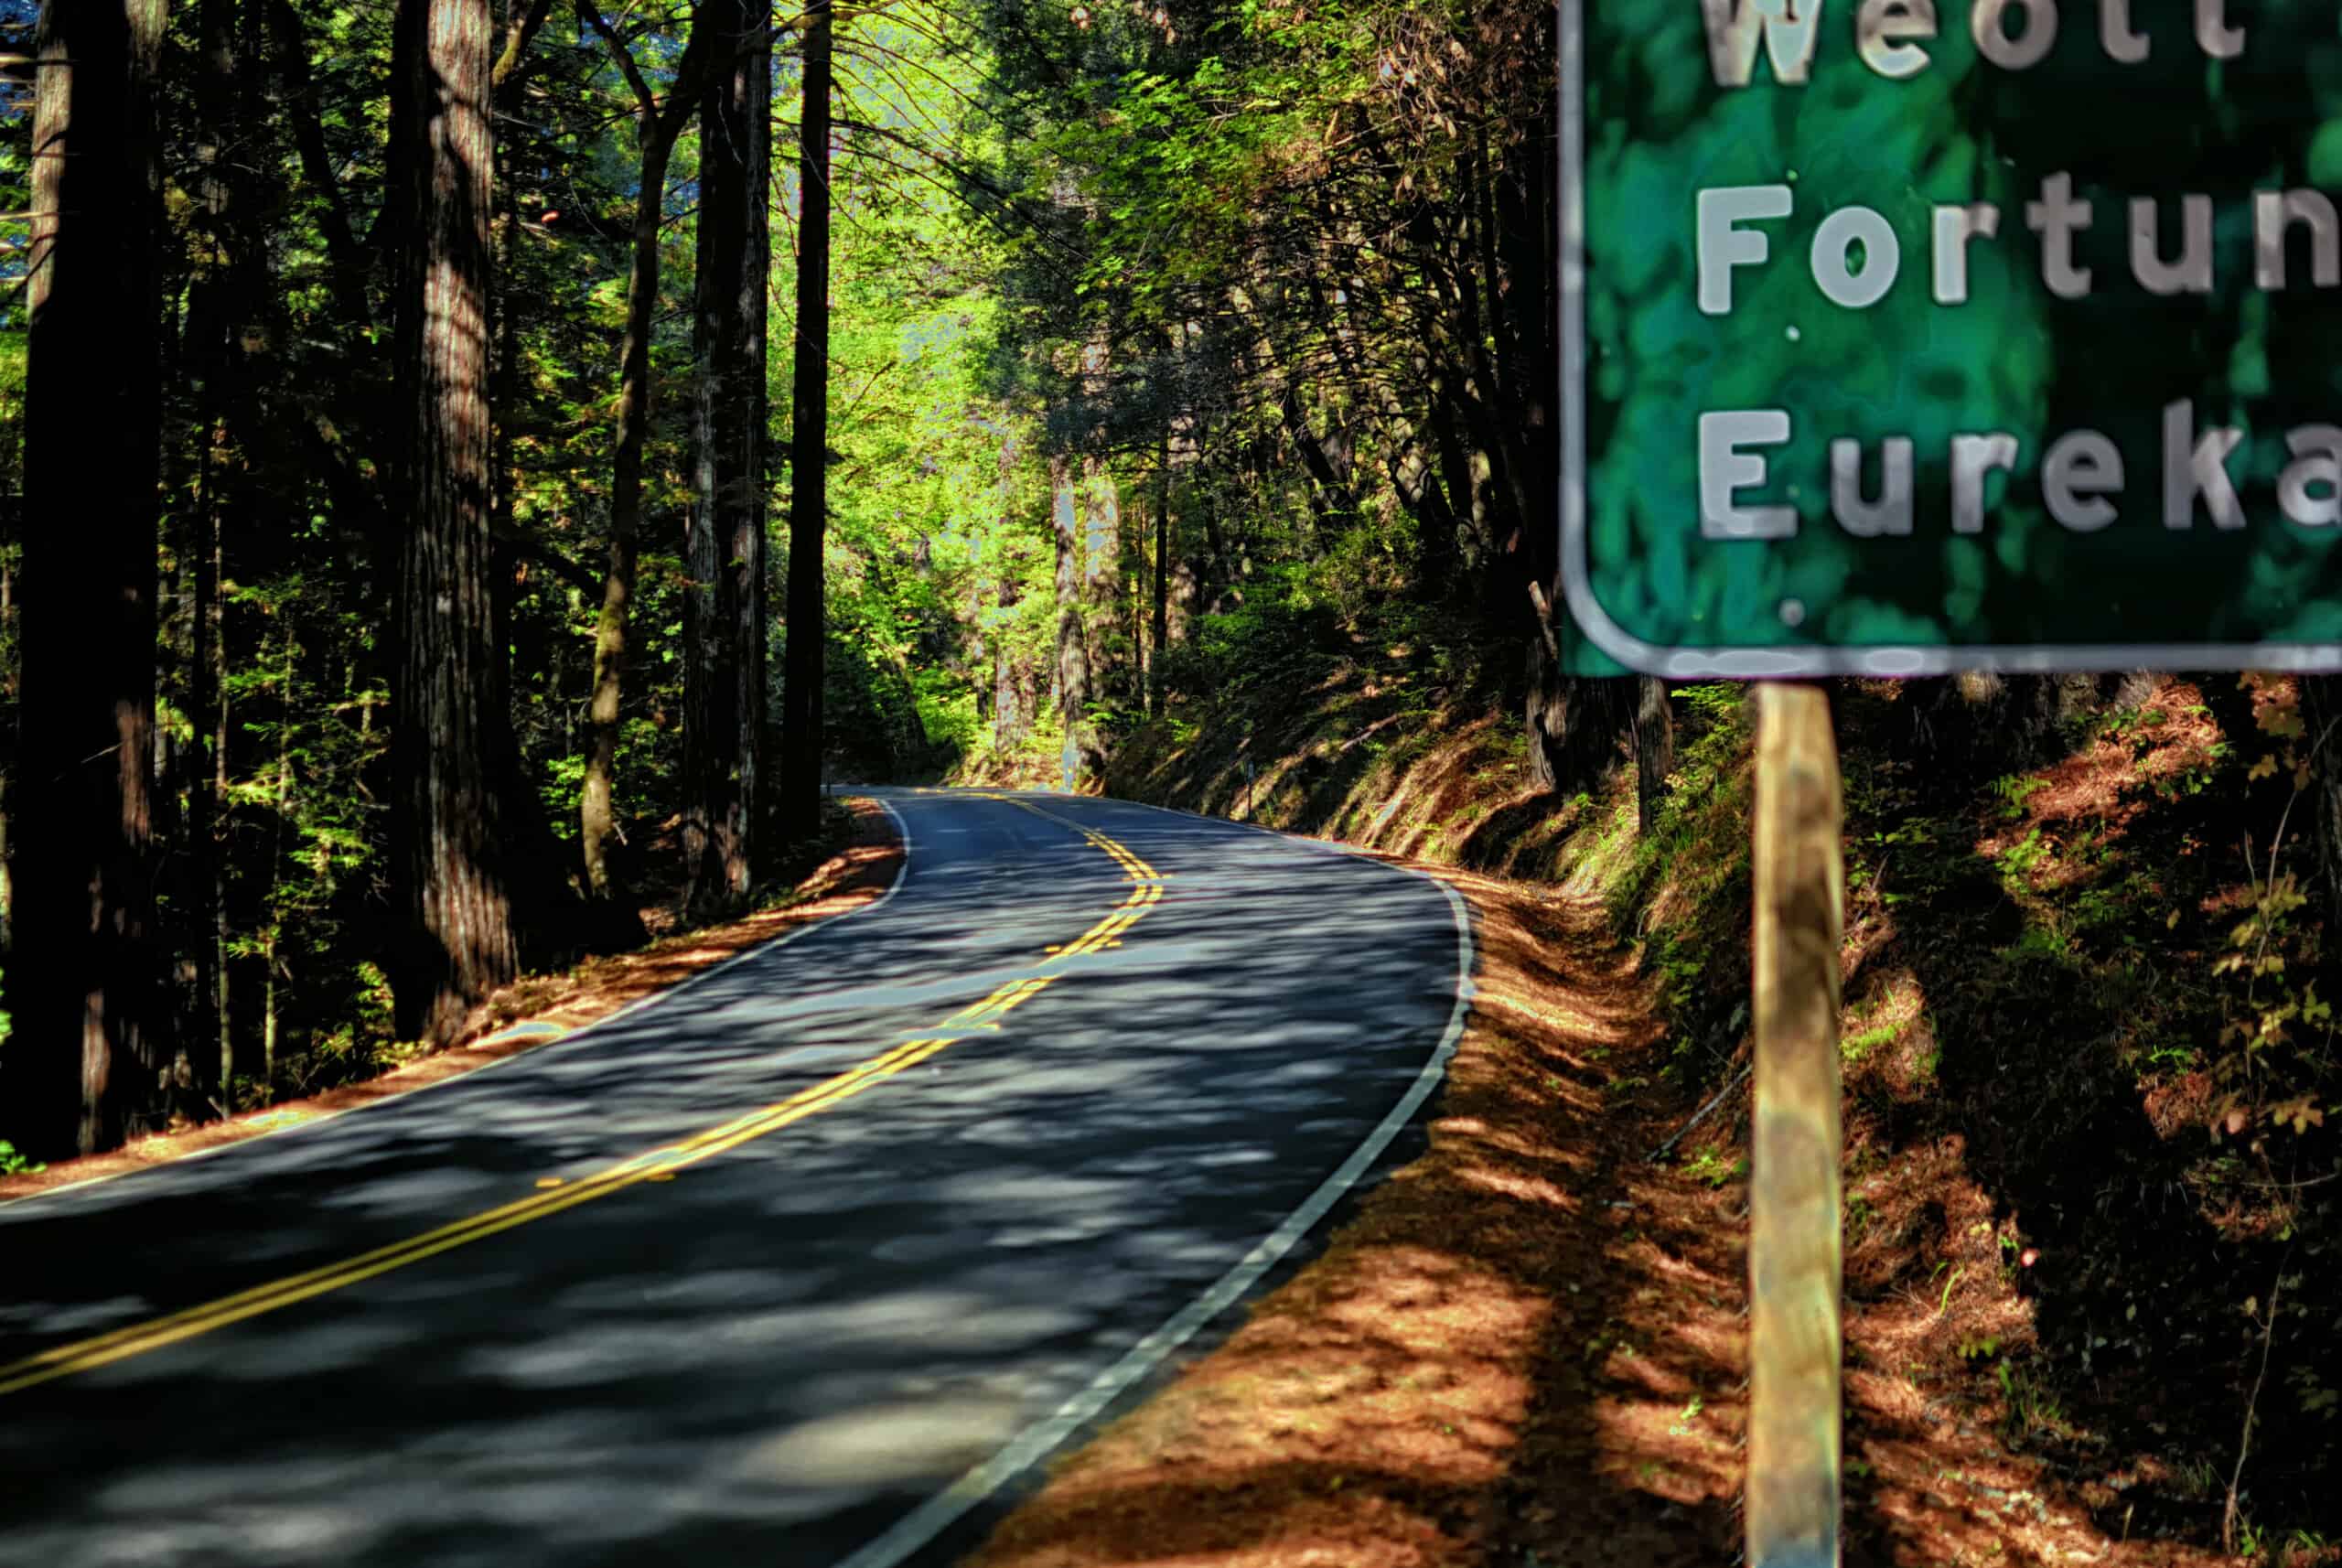 Road to Eureka through the redwoods